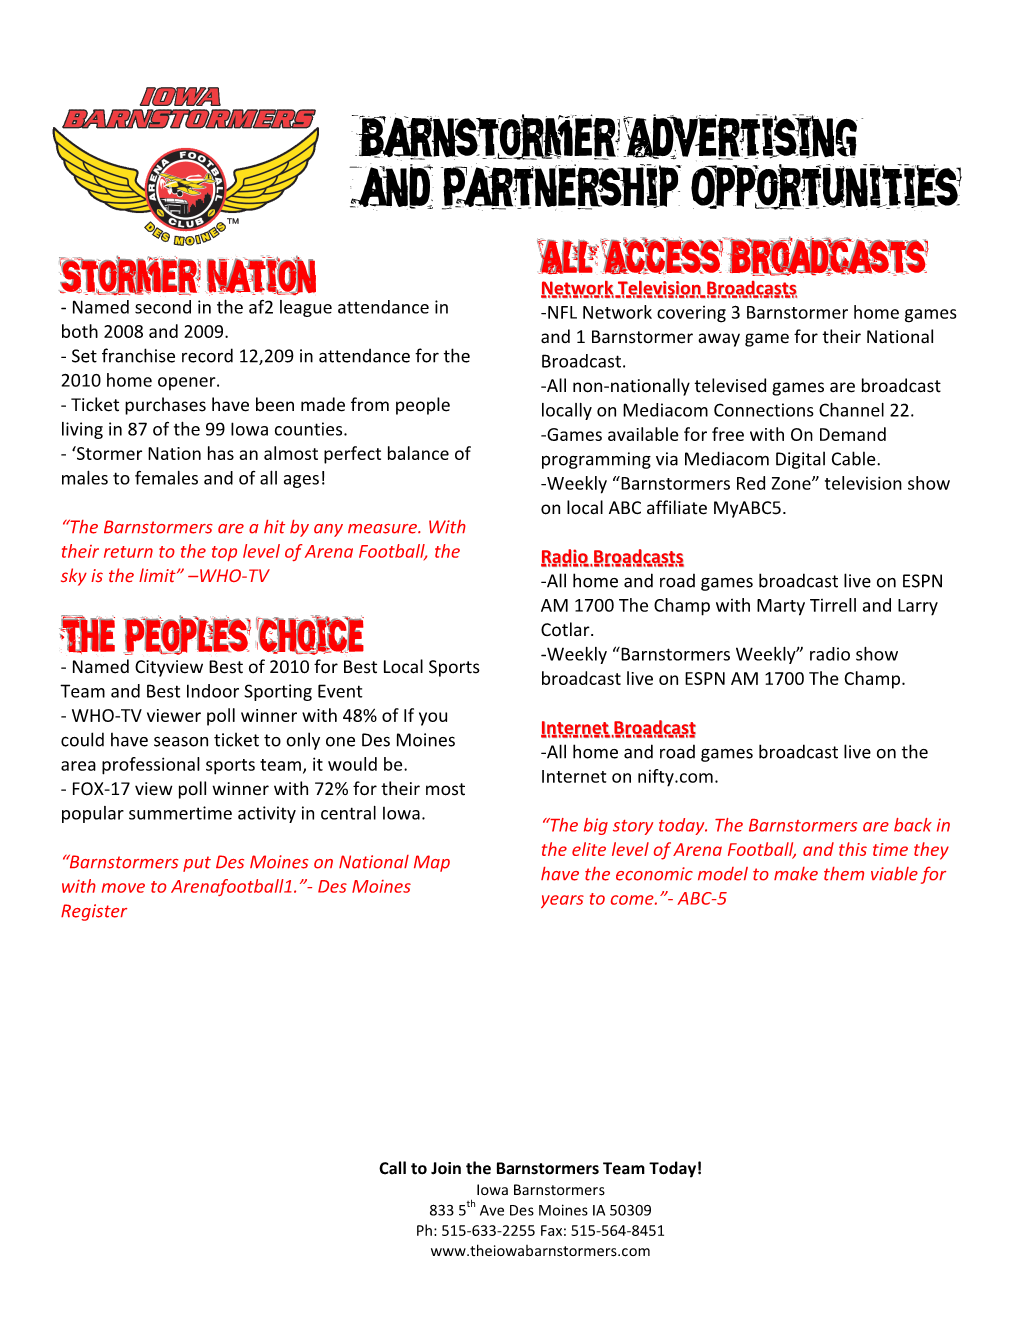 Barnstormer Advertising and Partnership Opportunities